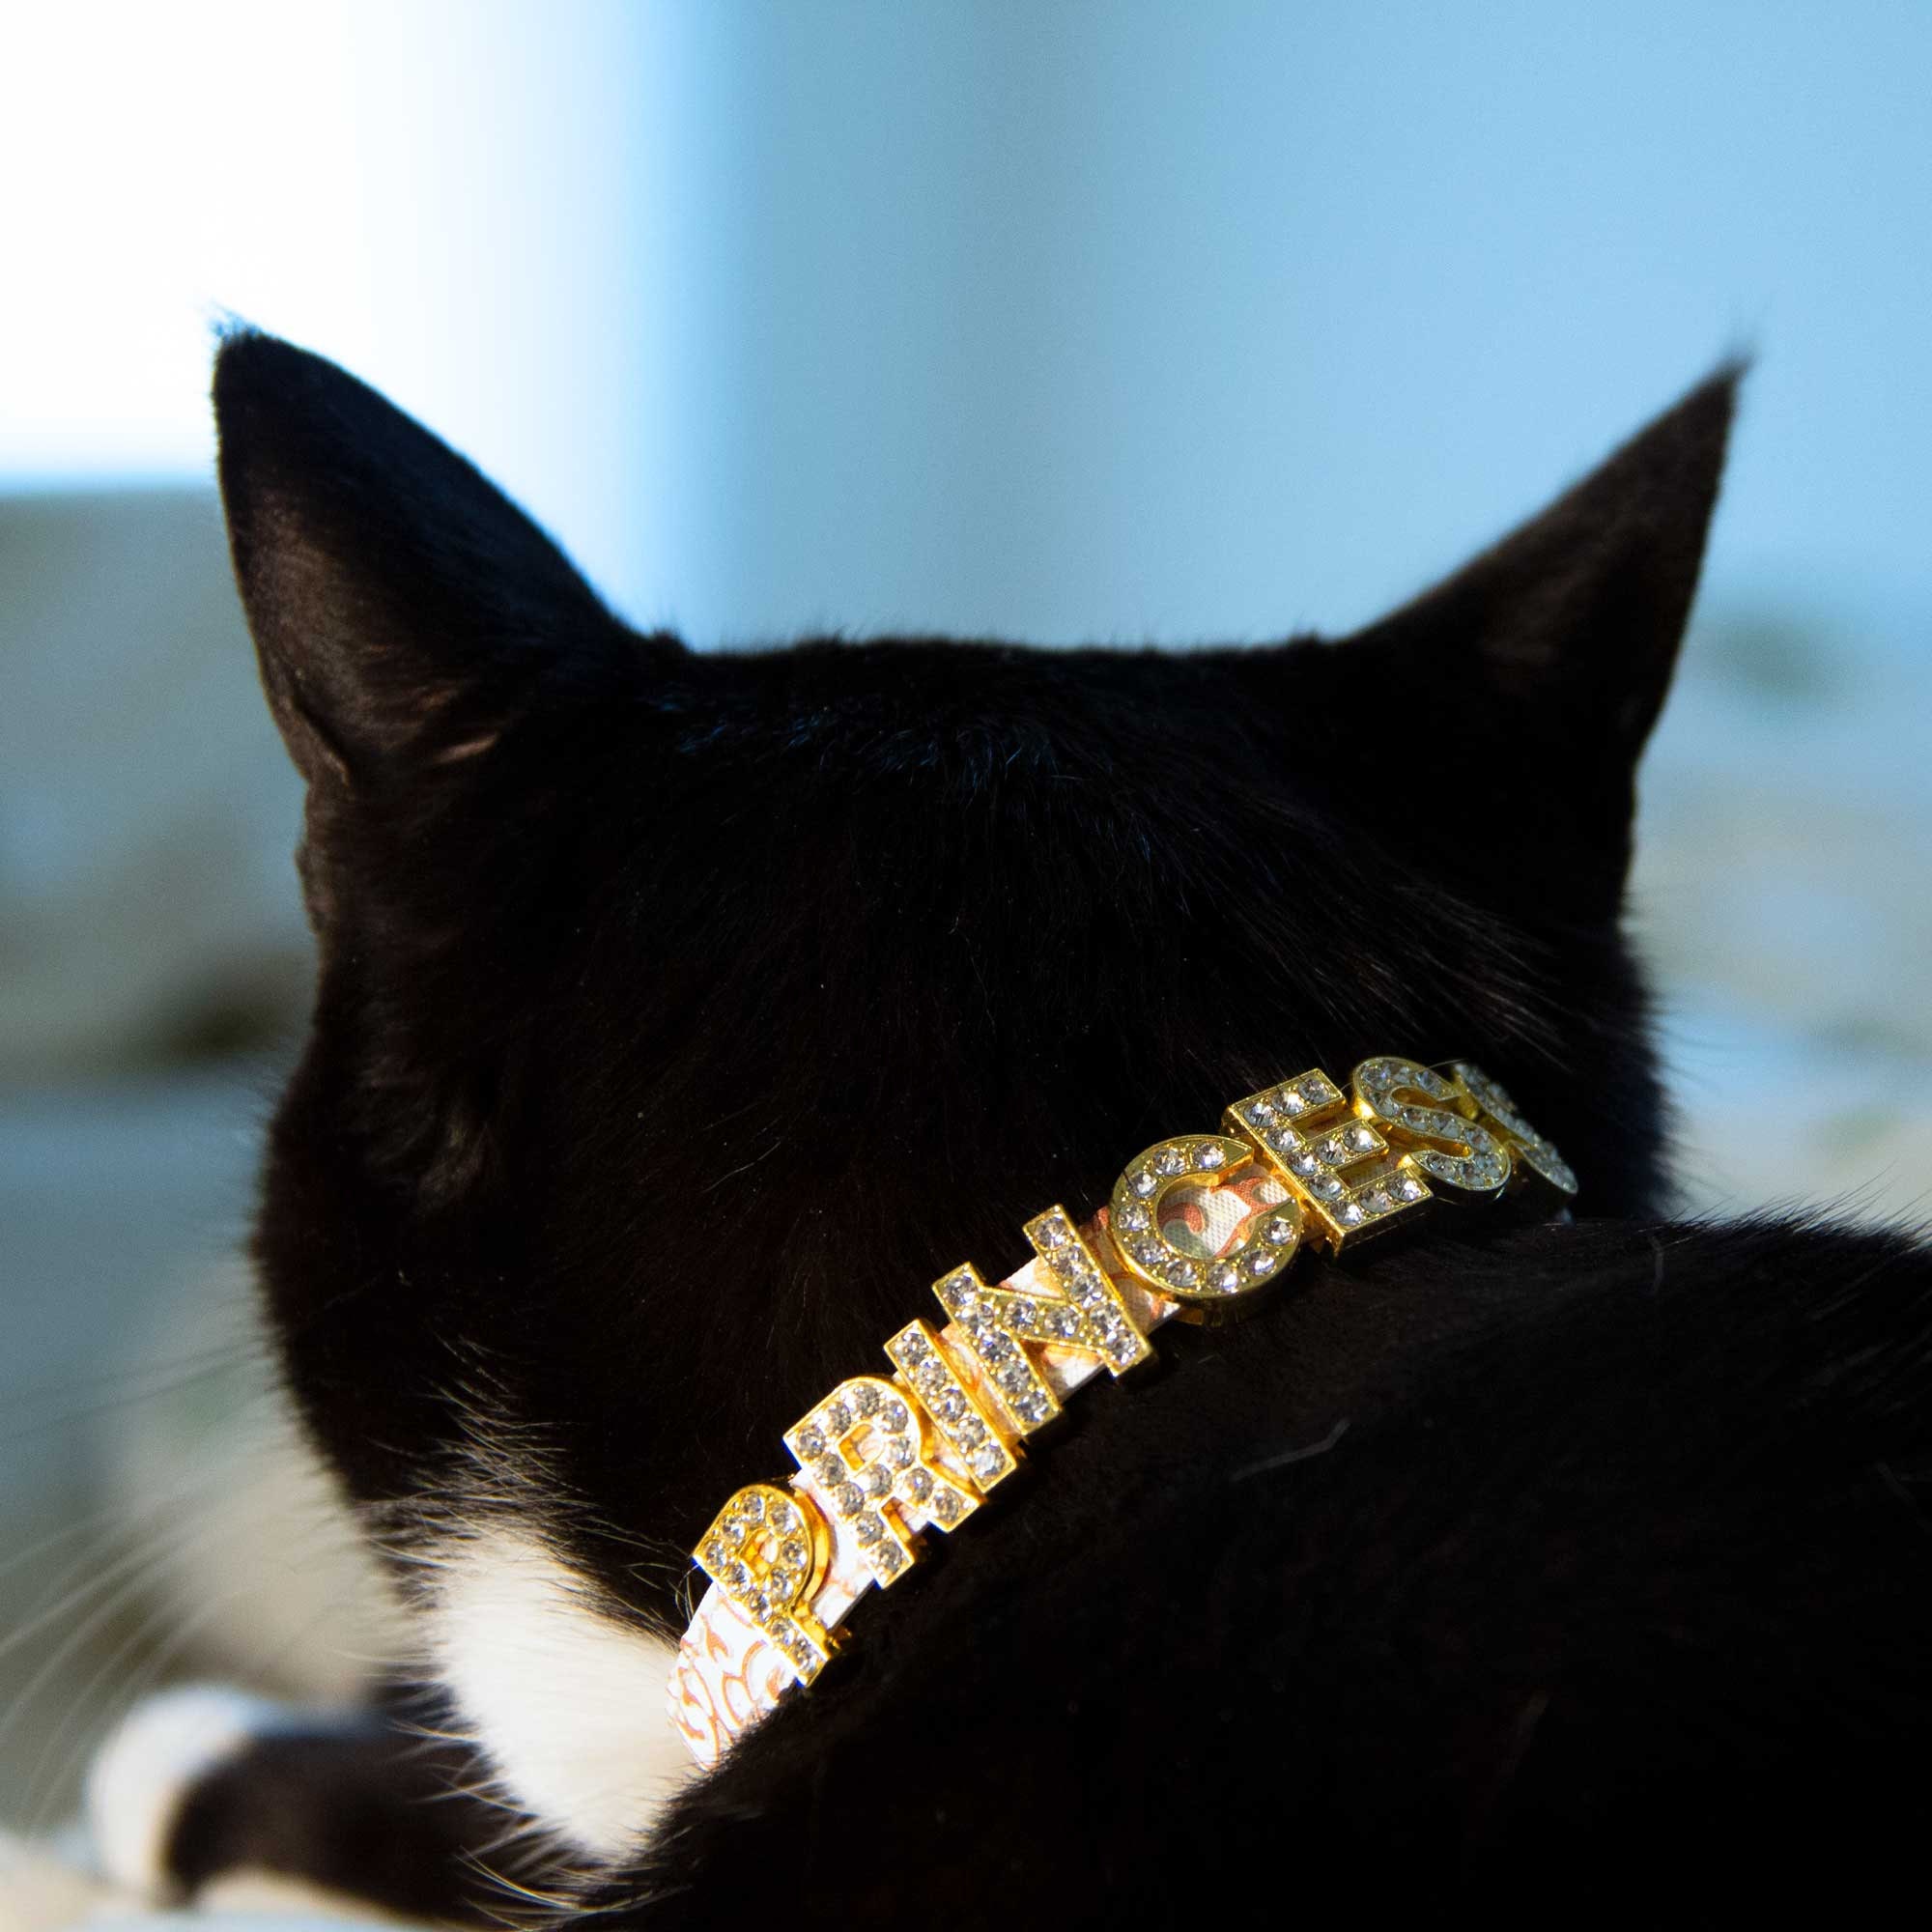 Collars Cat Chain, Bling Collars Cats, Luxury Cat Collars